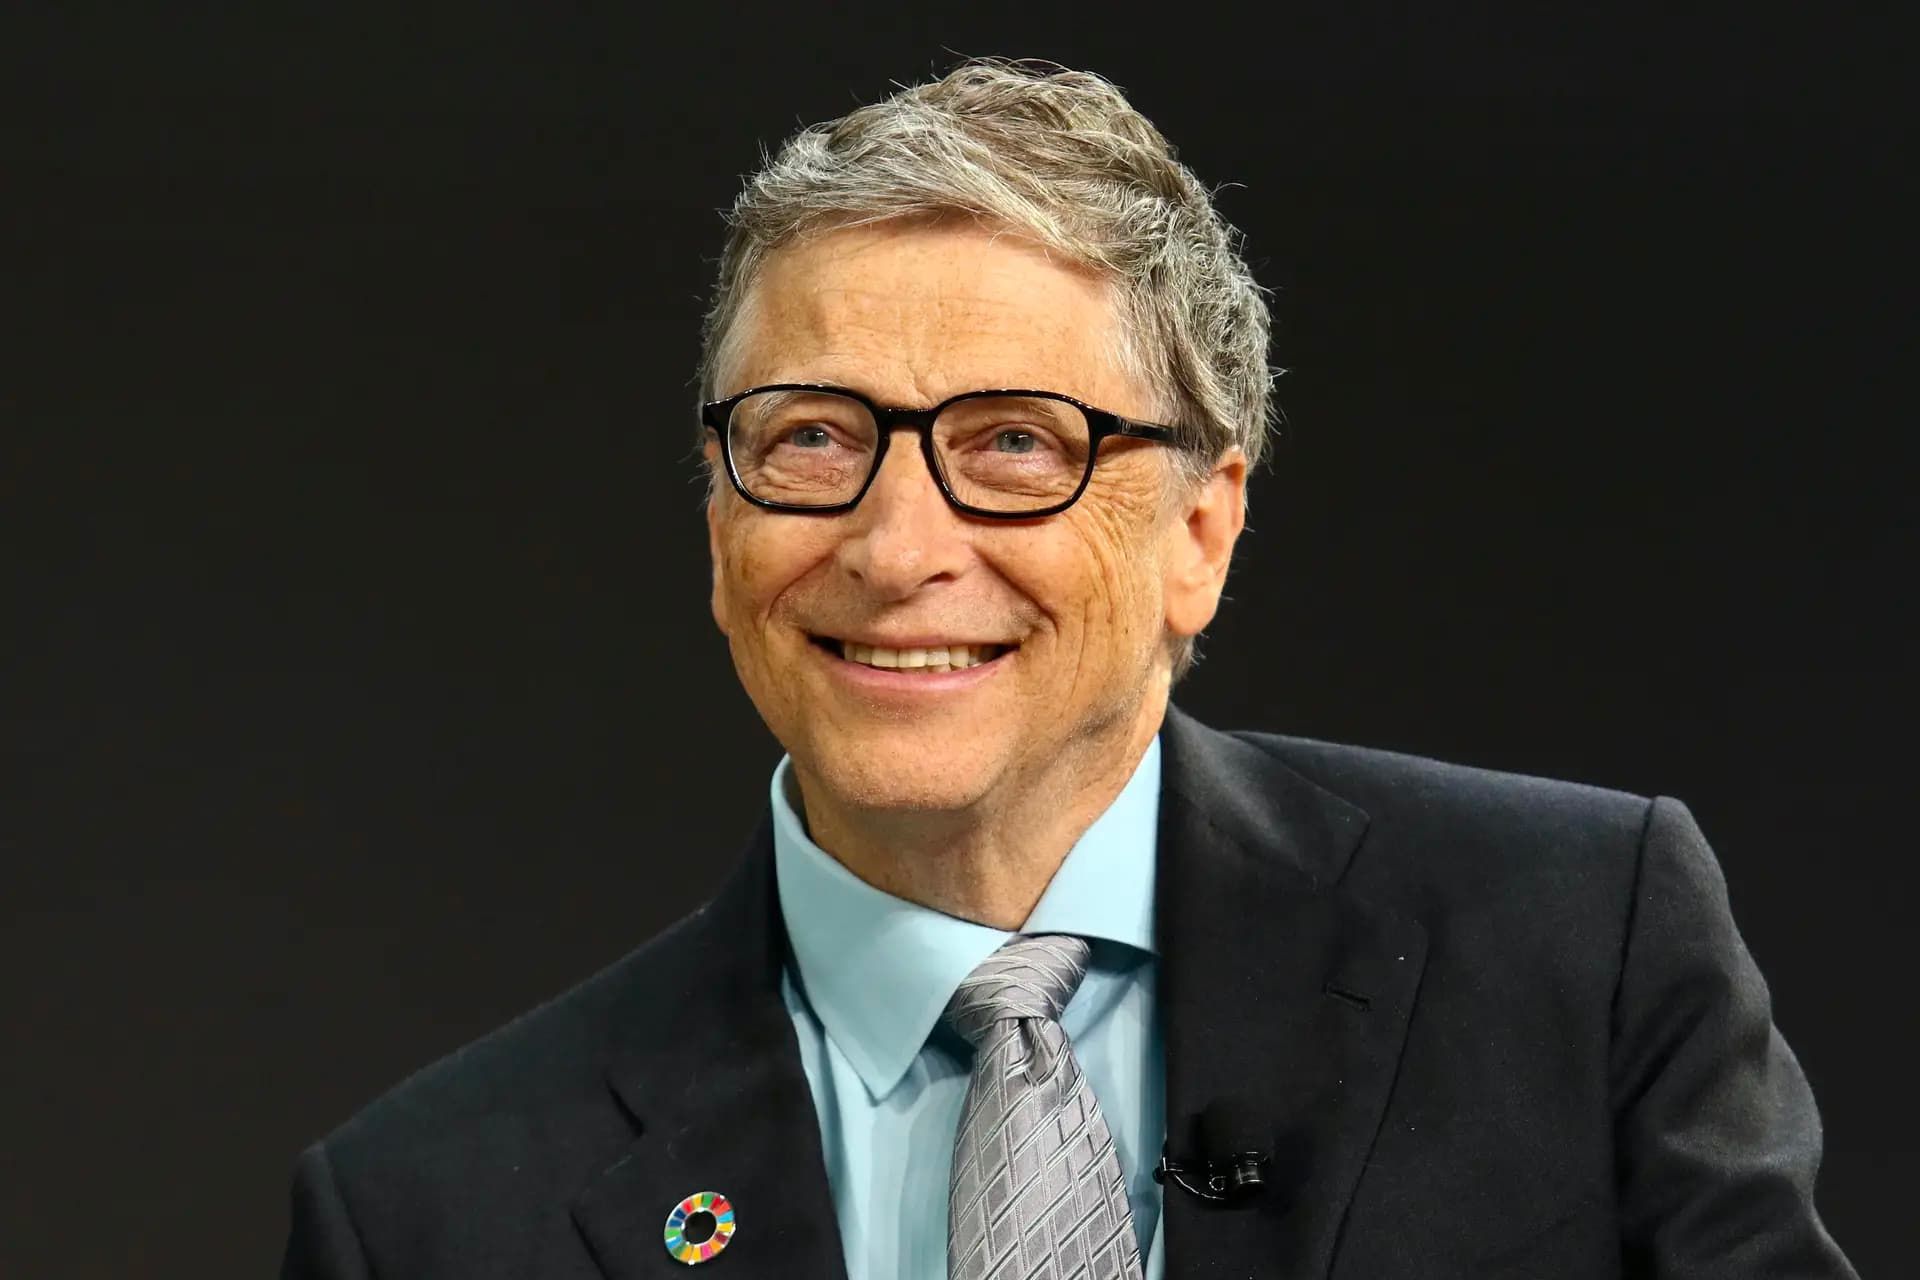 لبخند بیل گیتس / Bill Gates خوشحال